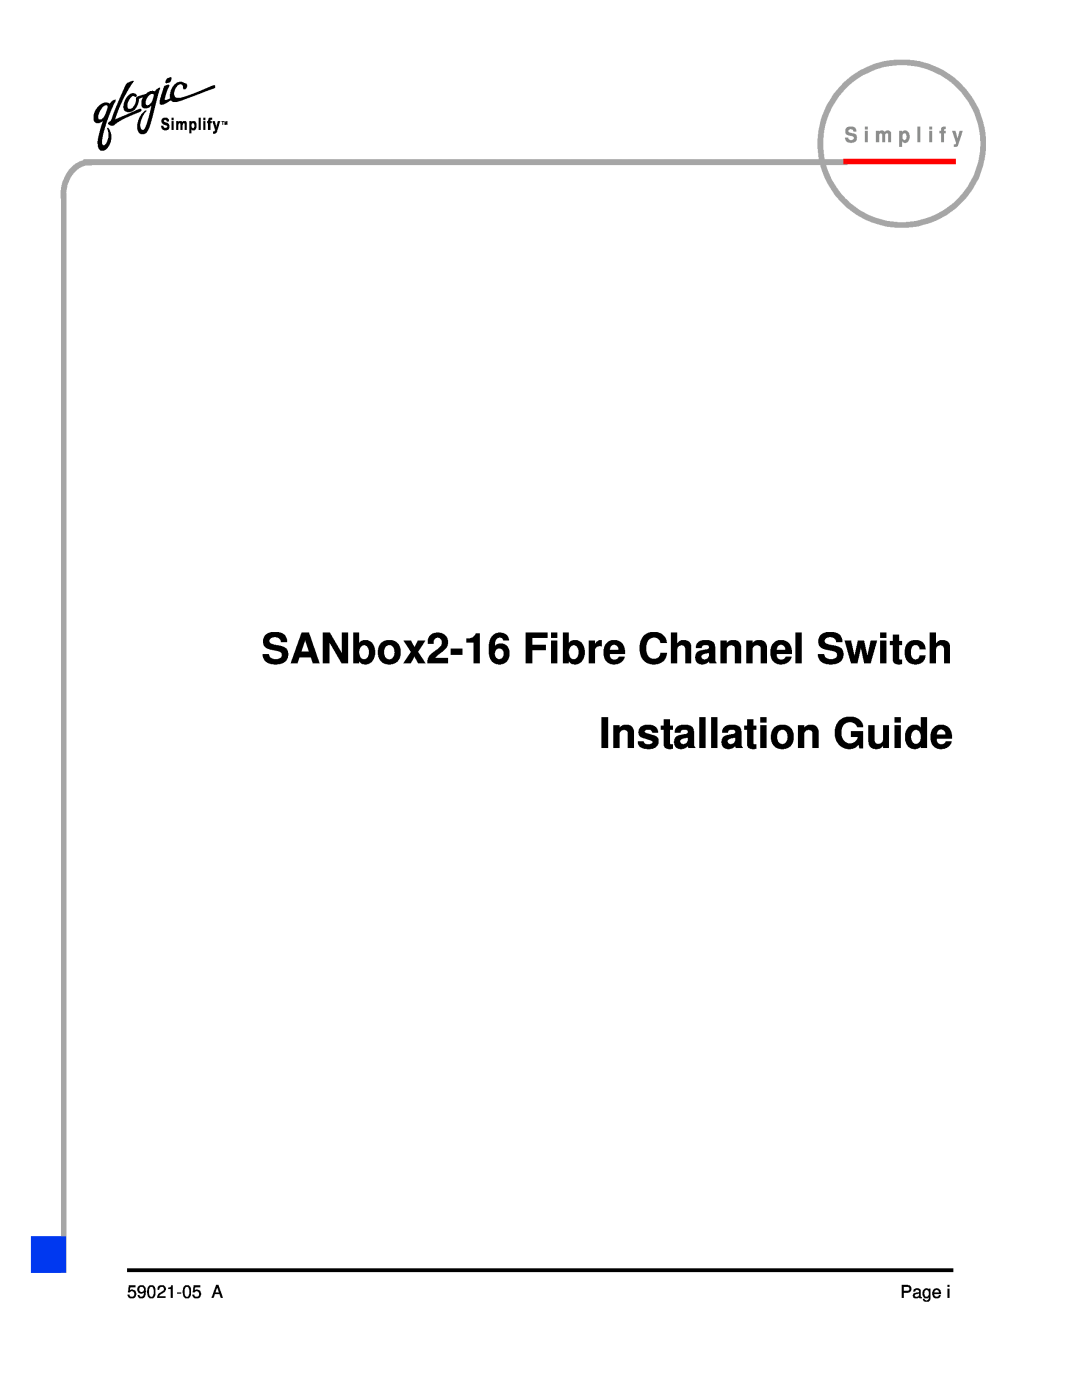 Q-Logic 59021-05 manual SANbox2-16 Fibre Channel Switch Installation Guide, S i m p l i f y 